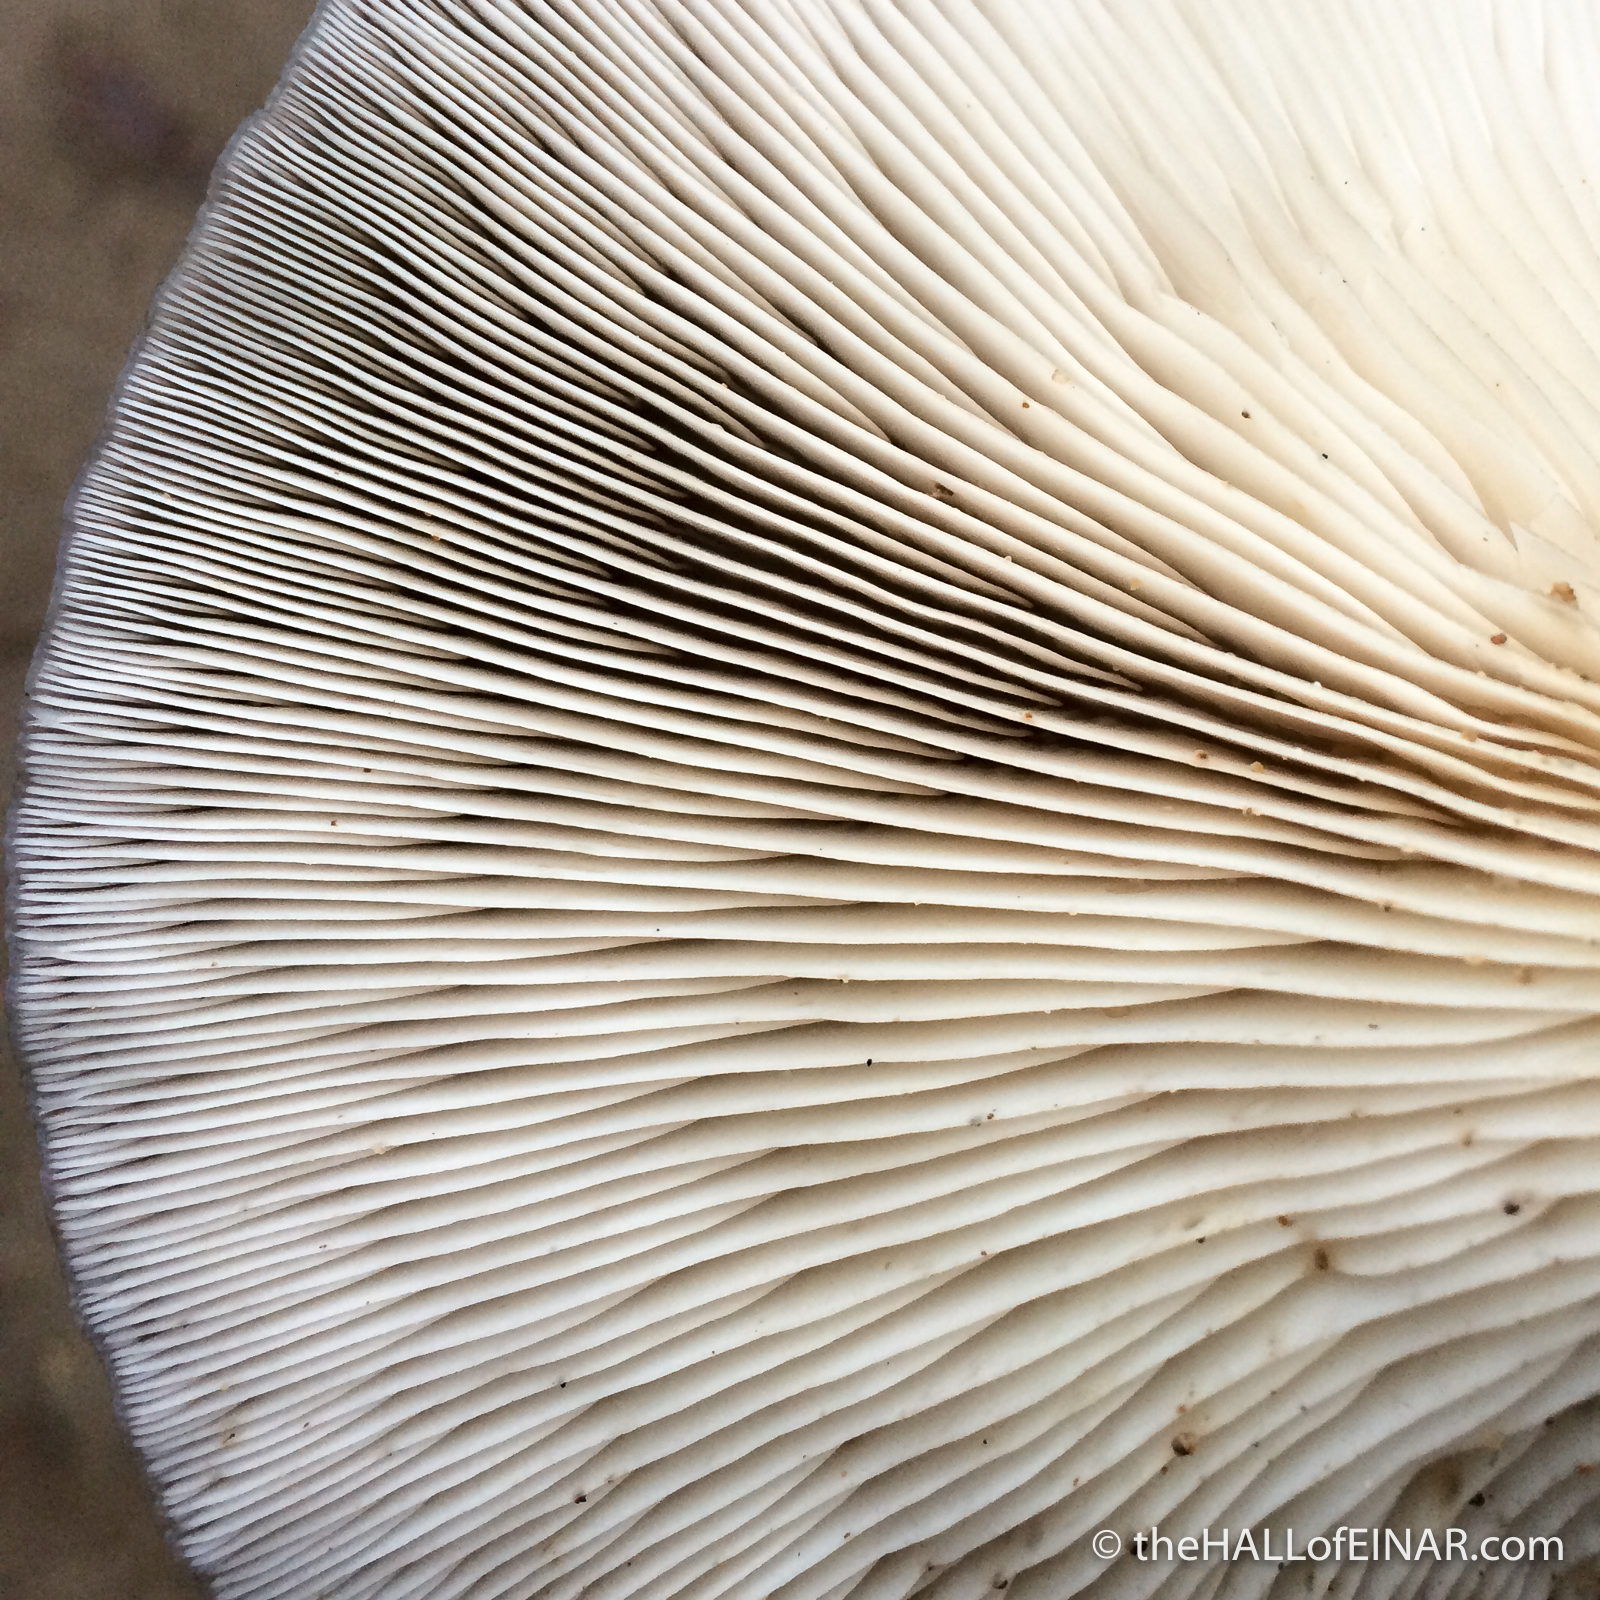 Oyster Mushroom - The Hall of Einar - photograph (c) David Bailey (not the)